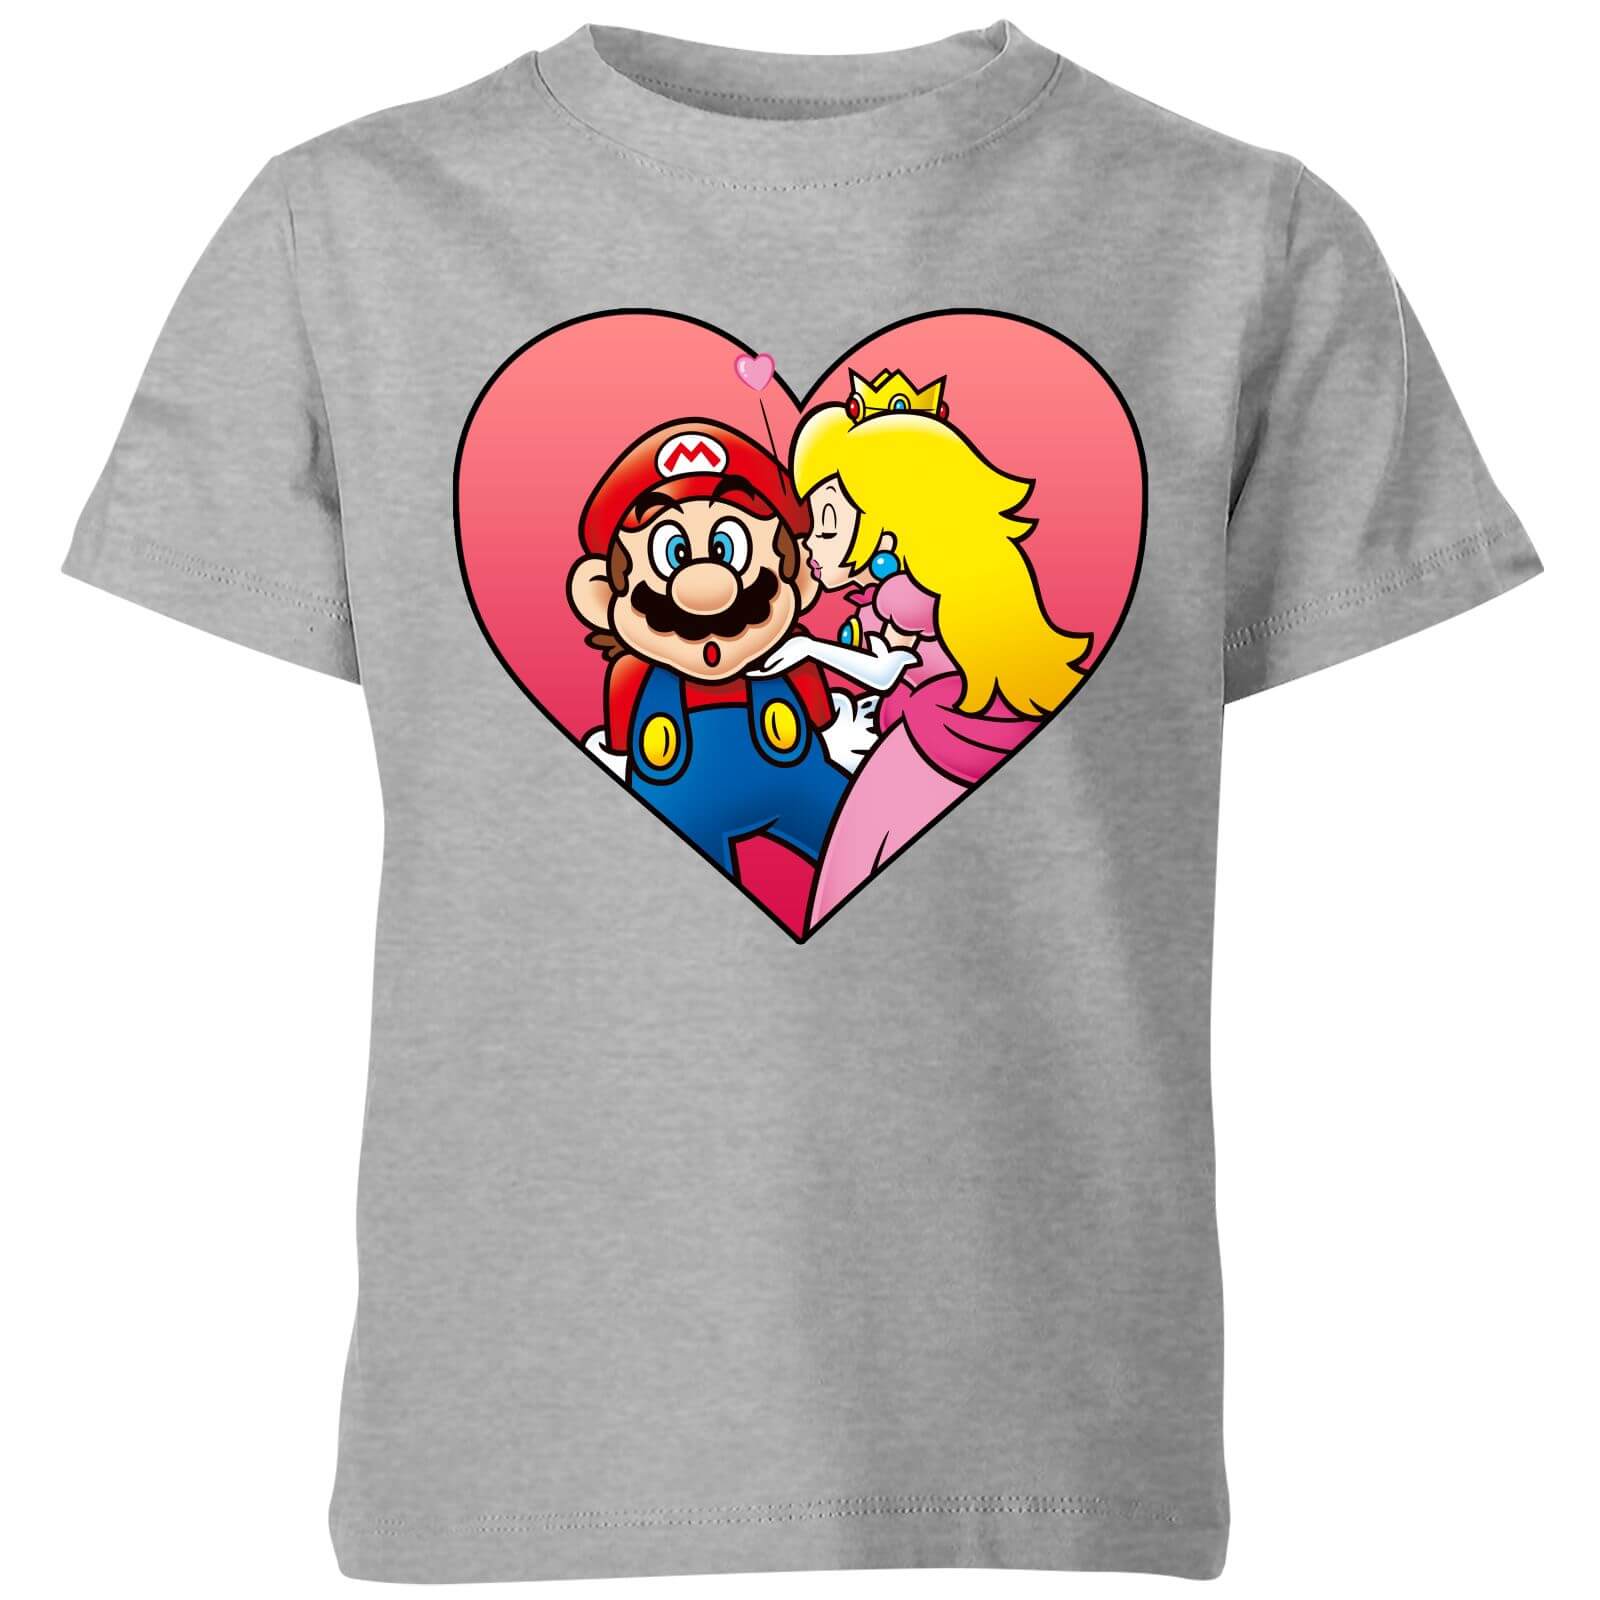 Nintendo Super Mario Peach Kiss Kids' T-Shirt - Grey - 7-8 Years